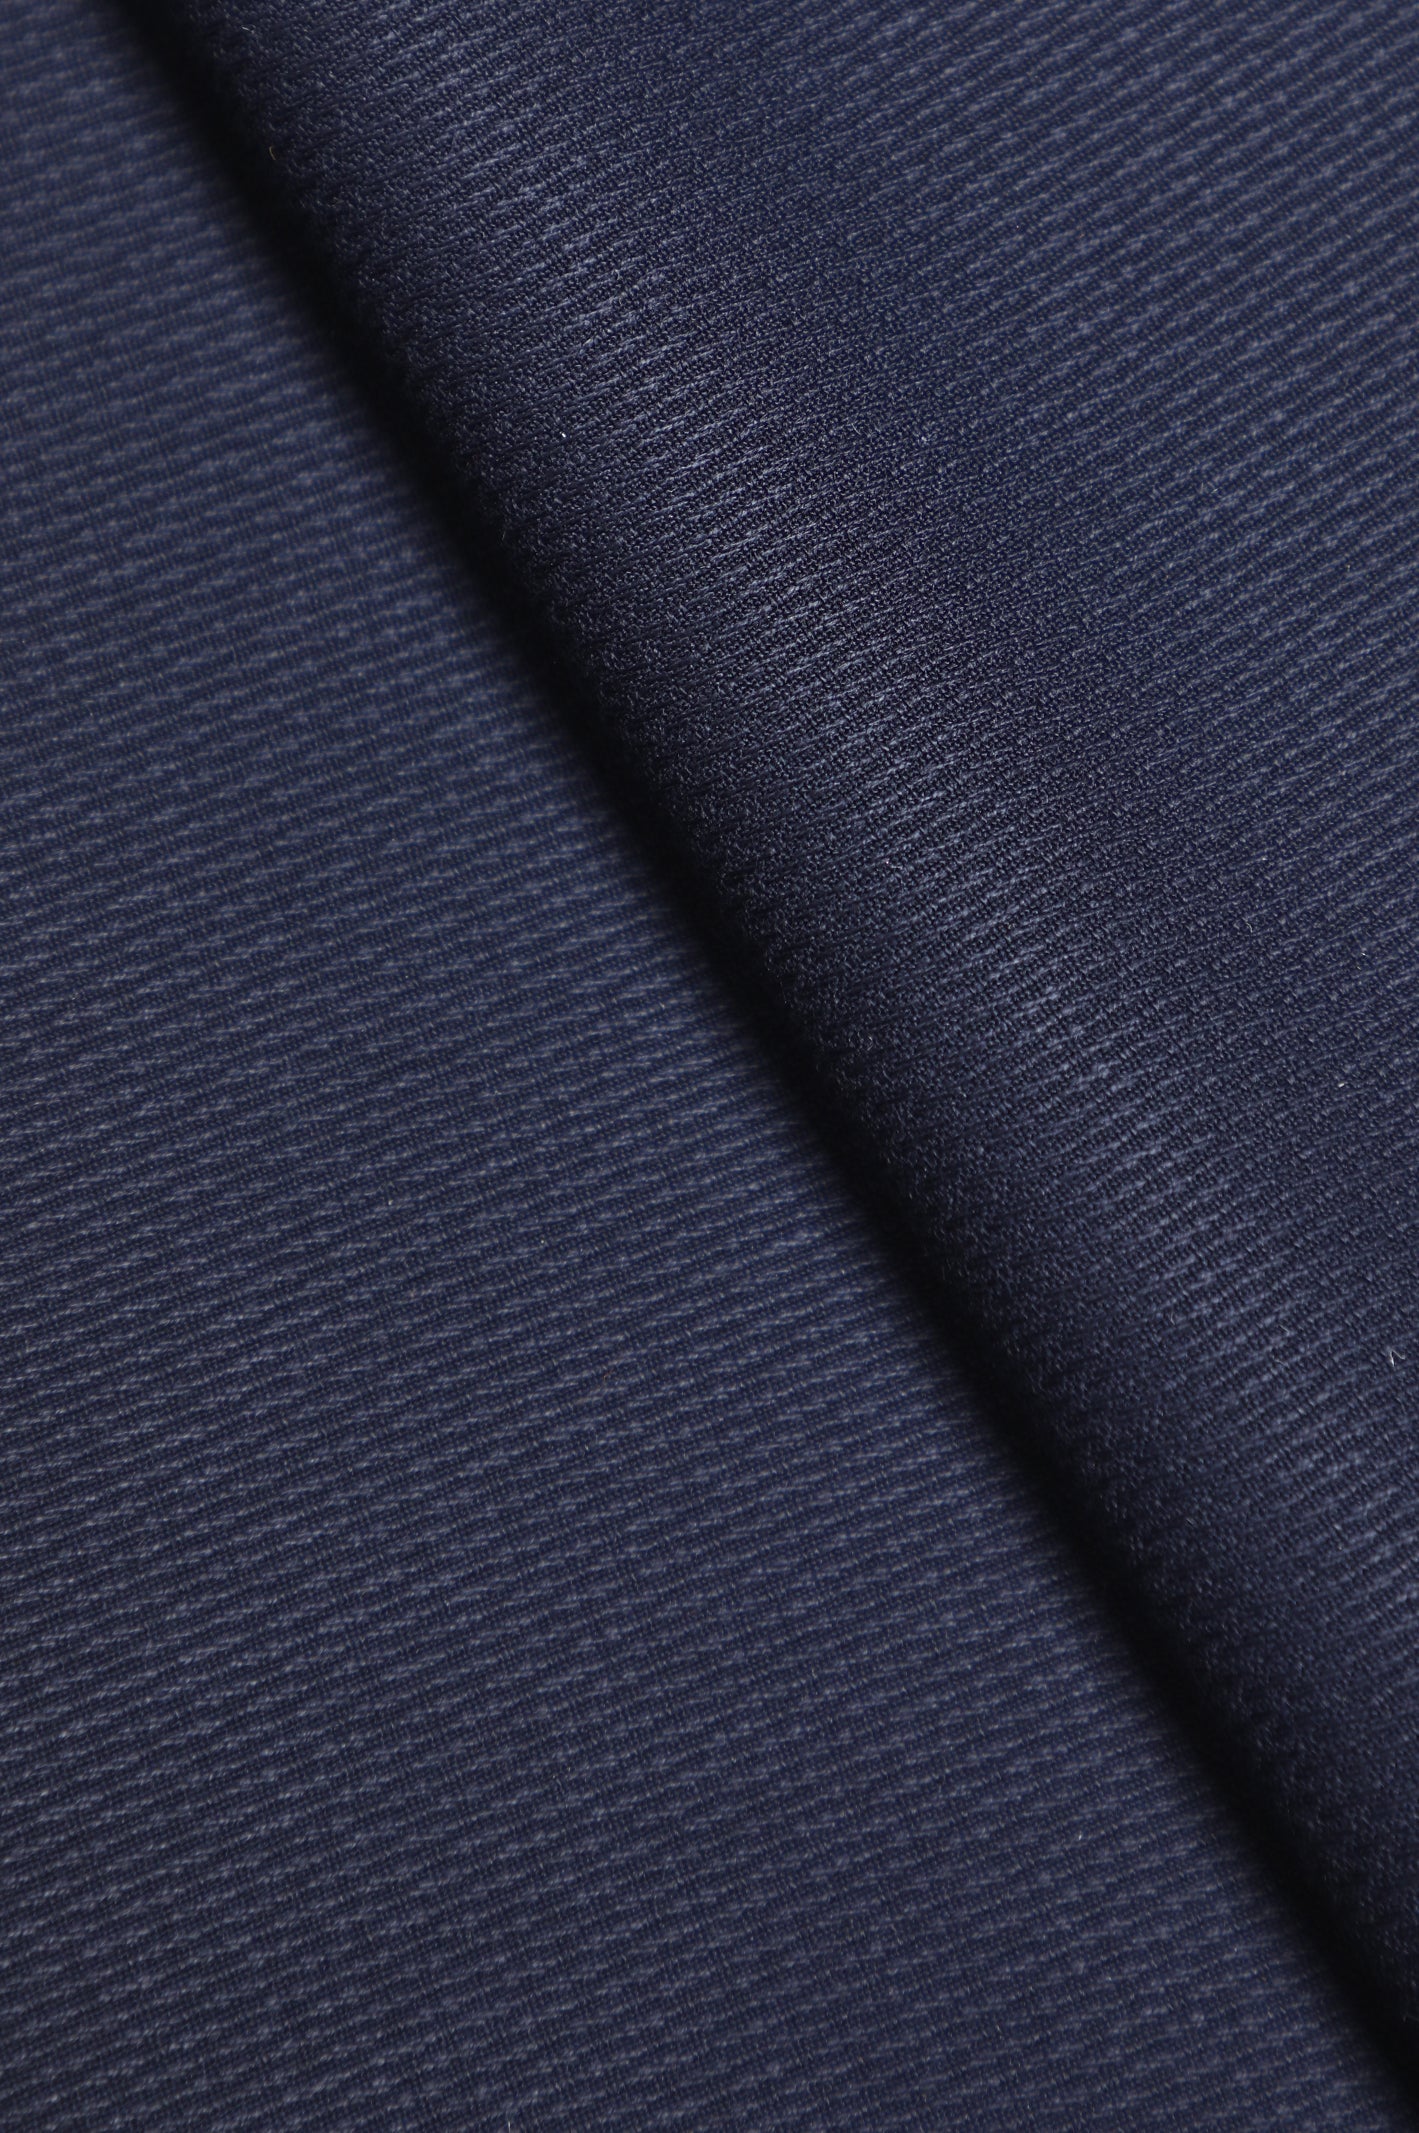 Unstitched Fabric for Men SKU: US0211-BLUE - Diners